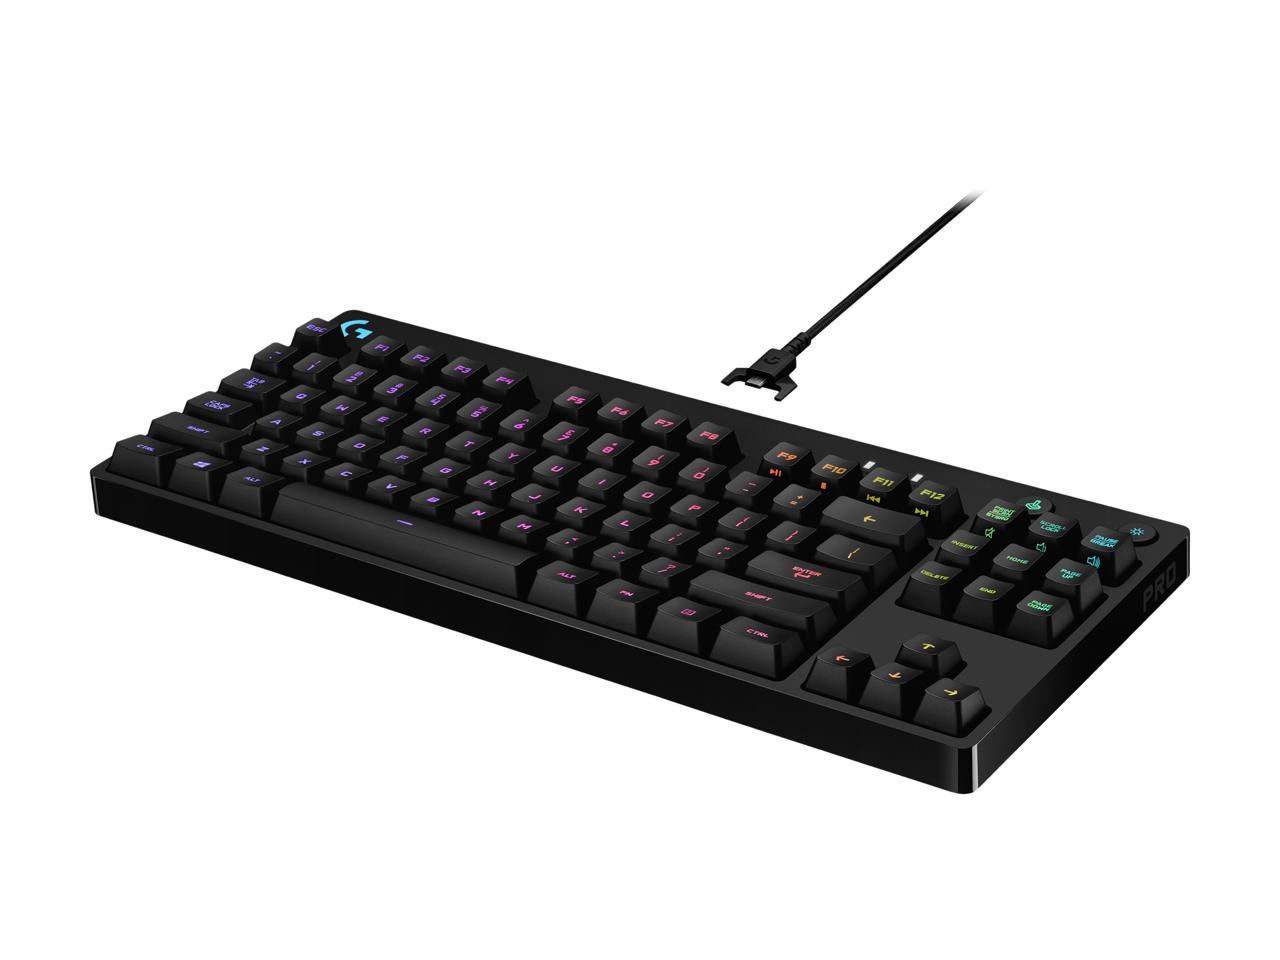 Logitech G Pro Mechanical Gaming Keyboard with 16.8 Million Color RGB Backlit 